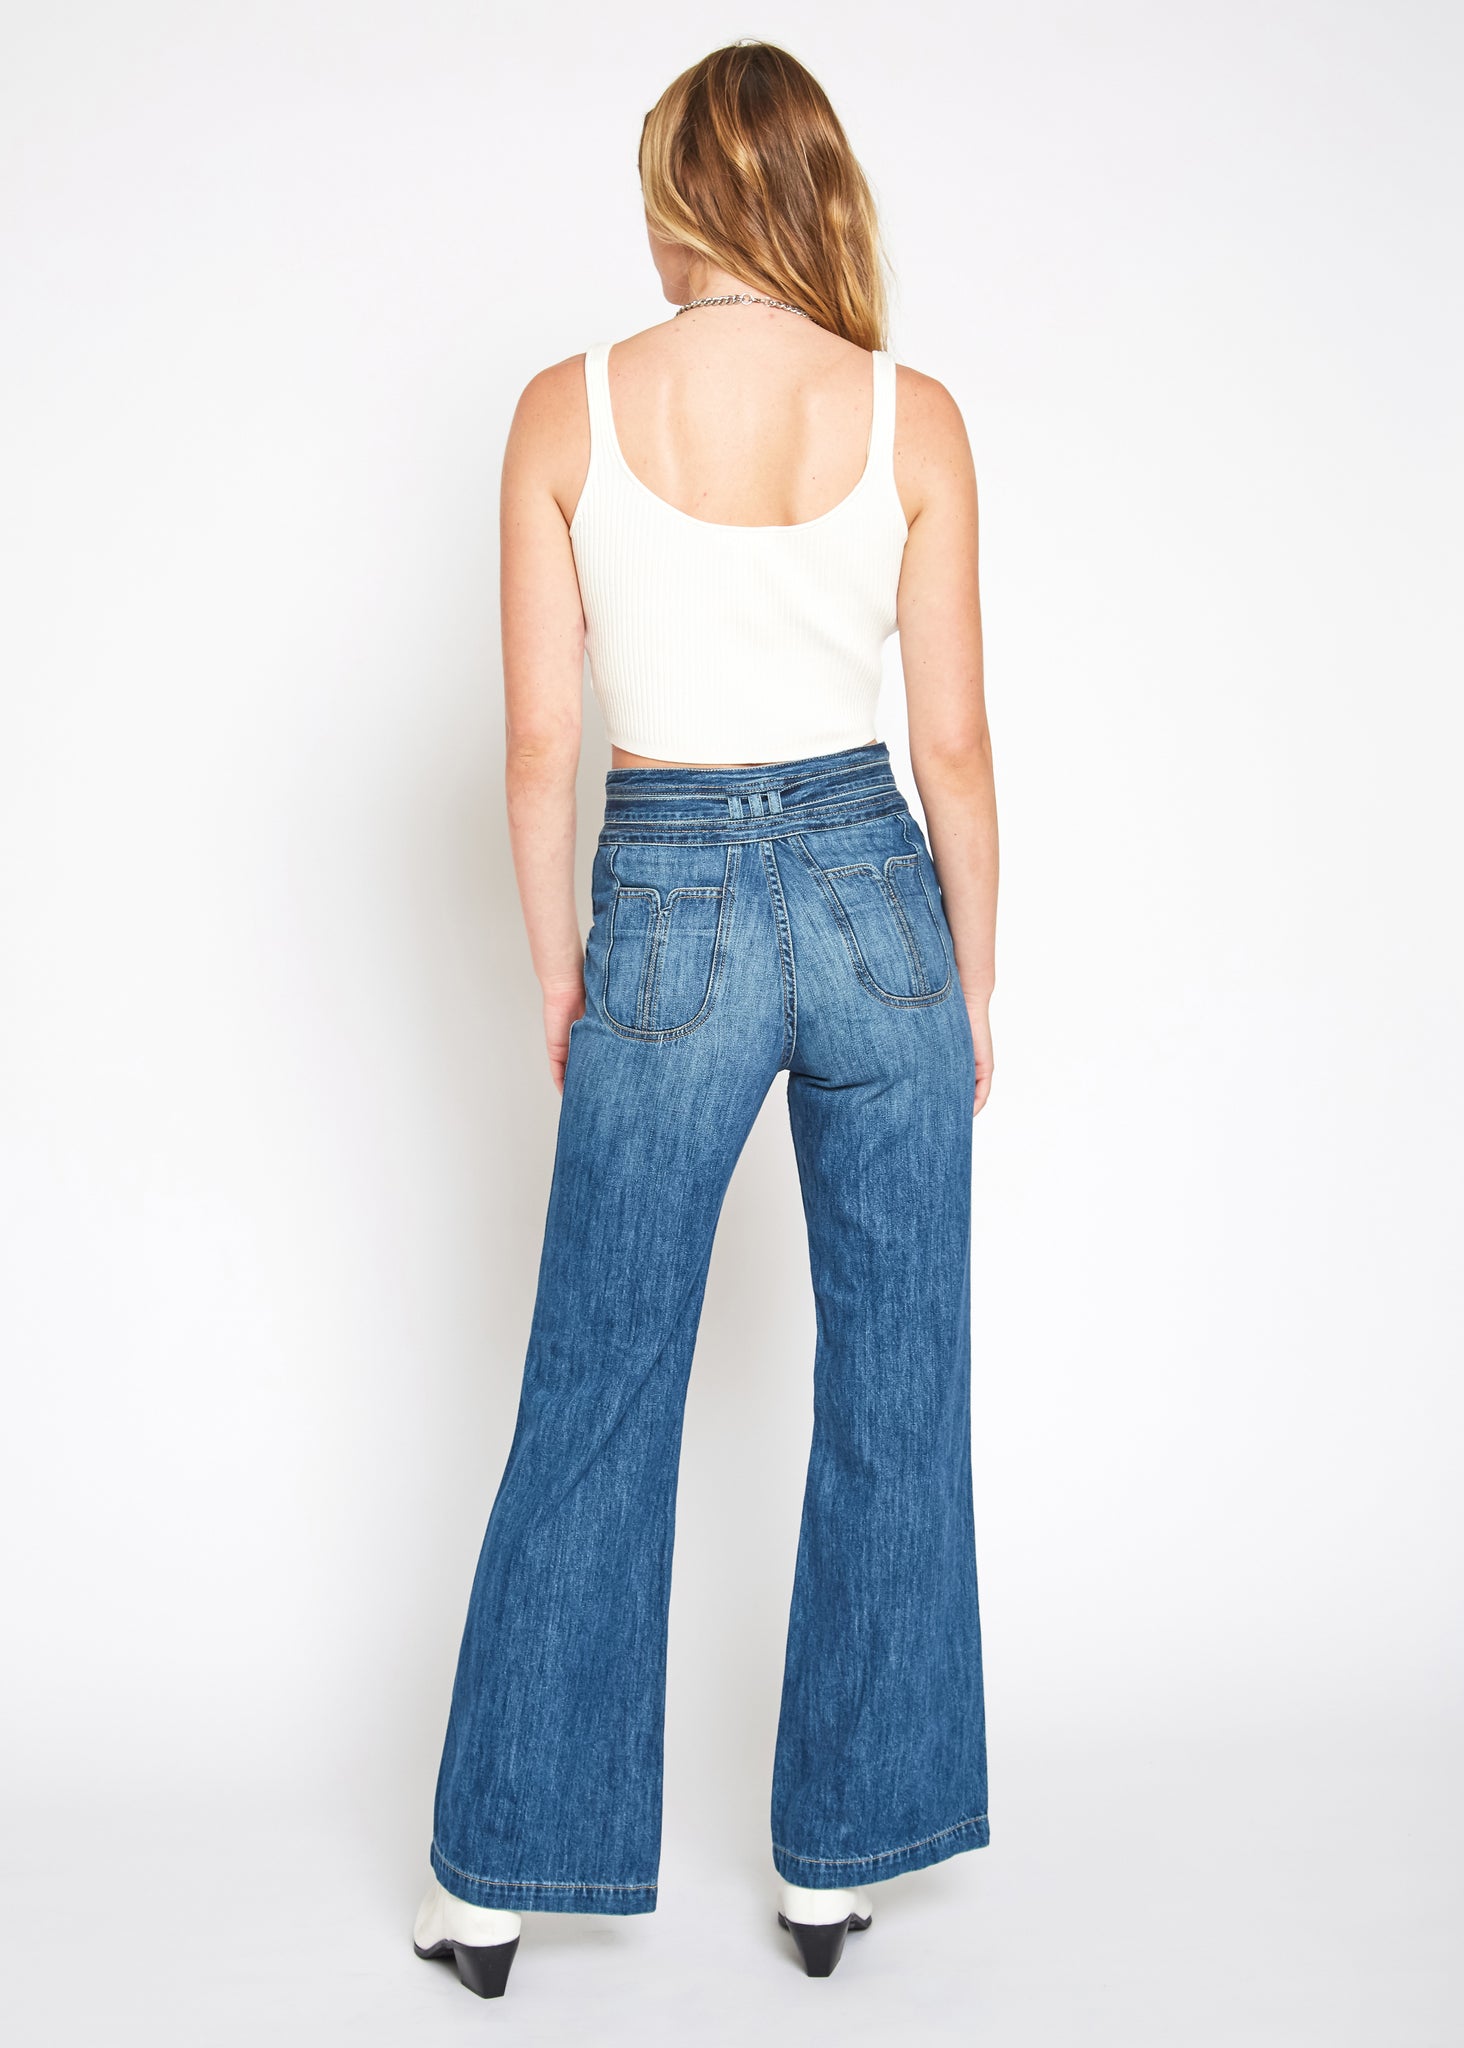 New Arrival Noend Rigid Women's Jeans | Noend Jeans